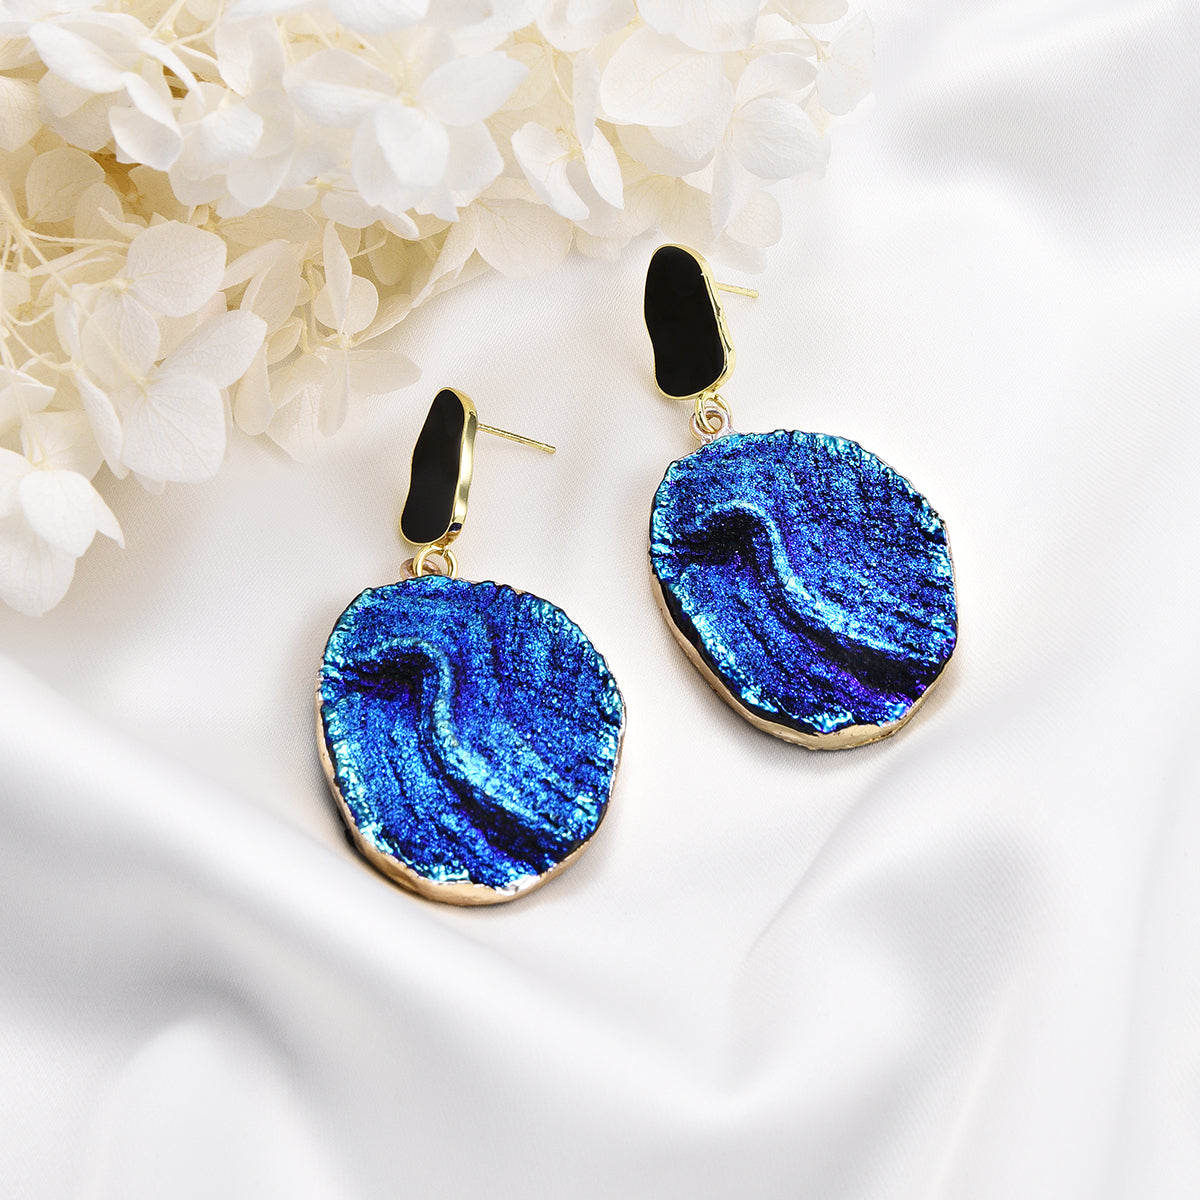 Elegant blue asteroid shaped earrings